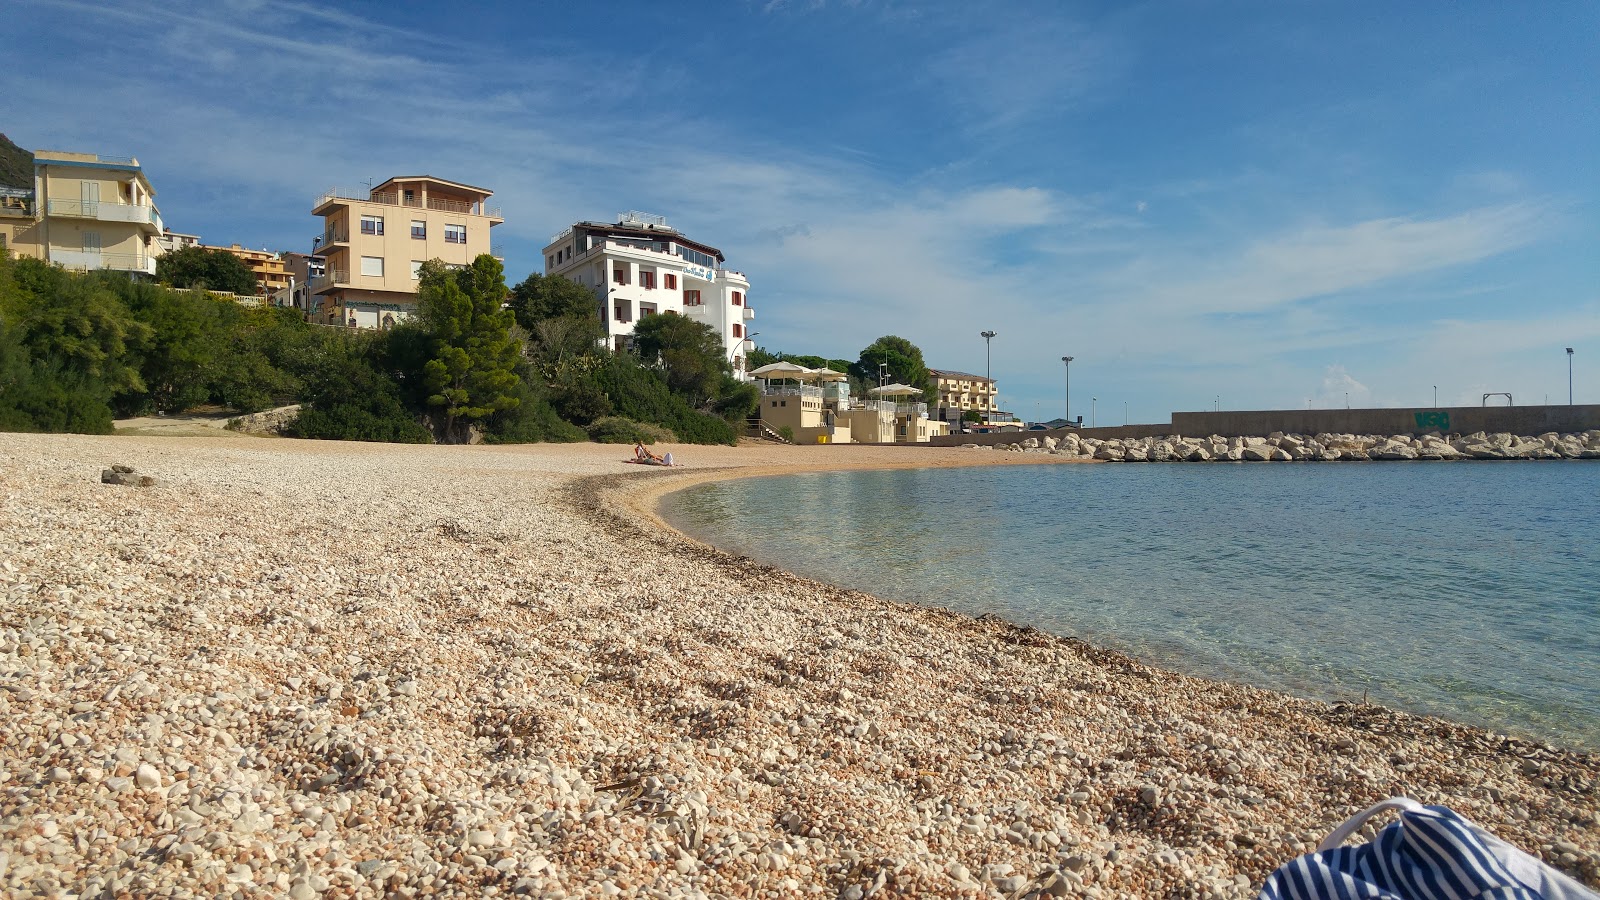 Zdjęcie Spiaggia Di Cala Gonone i osada